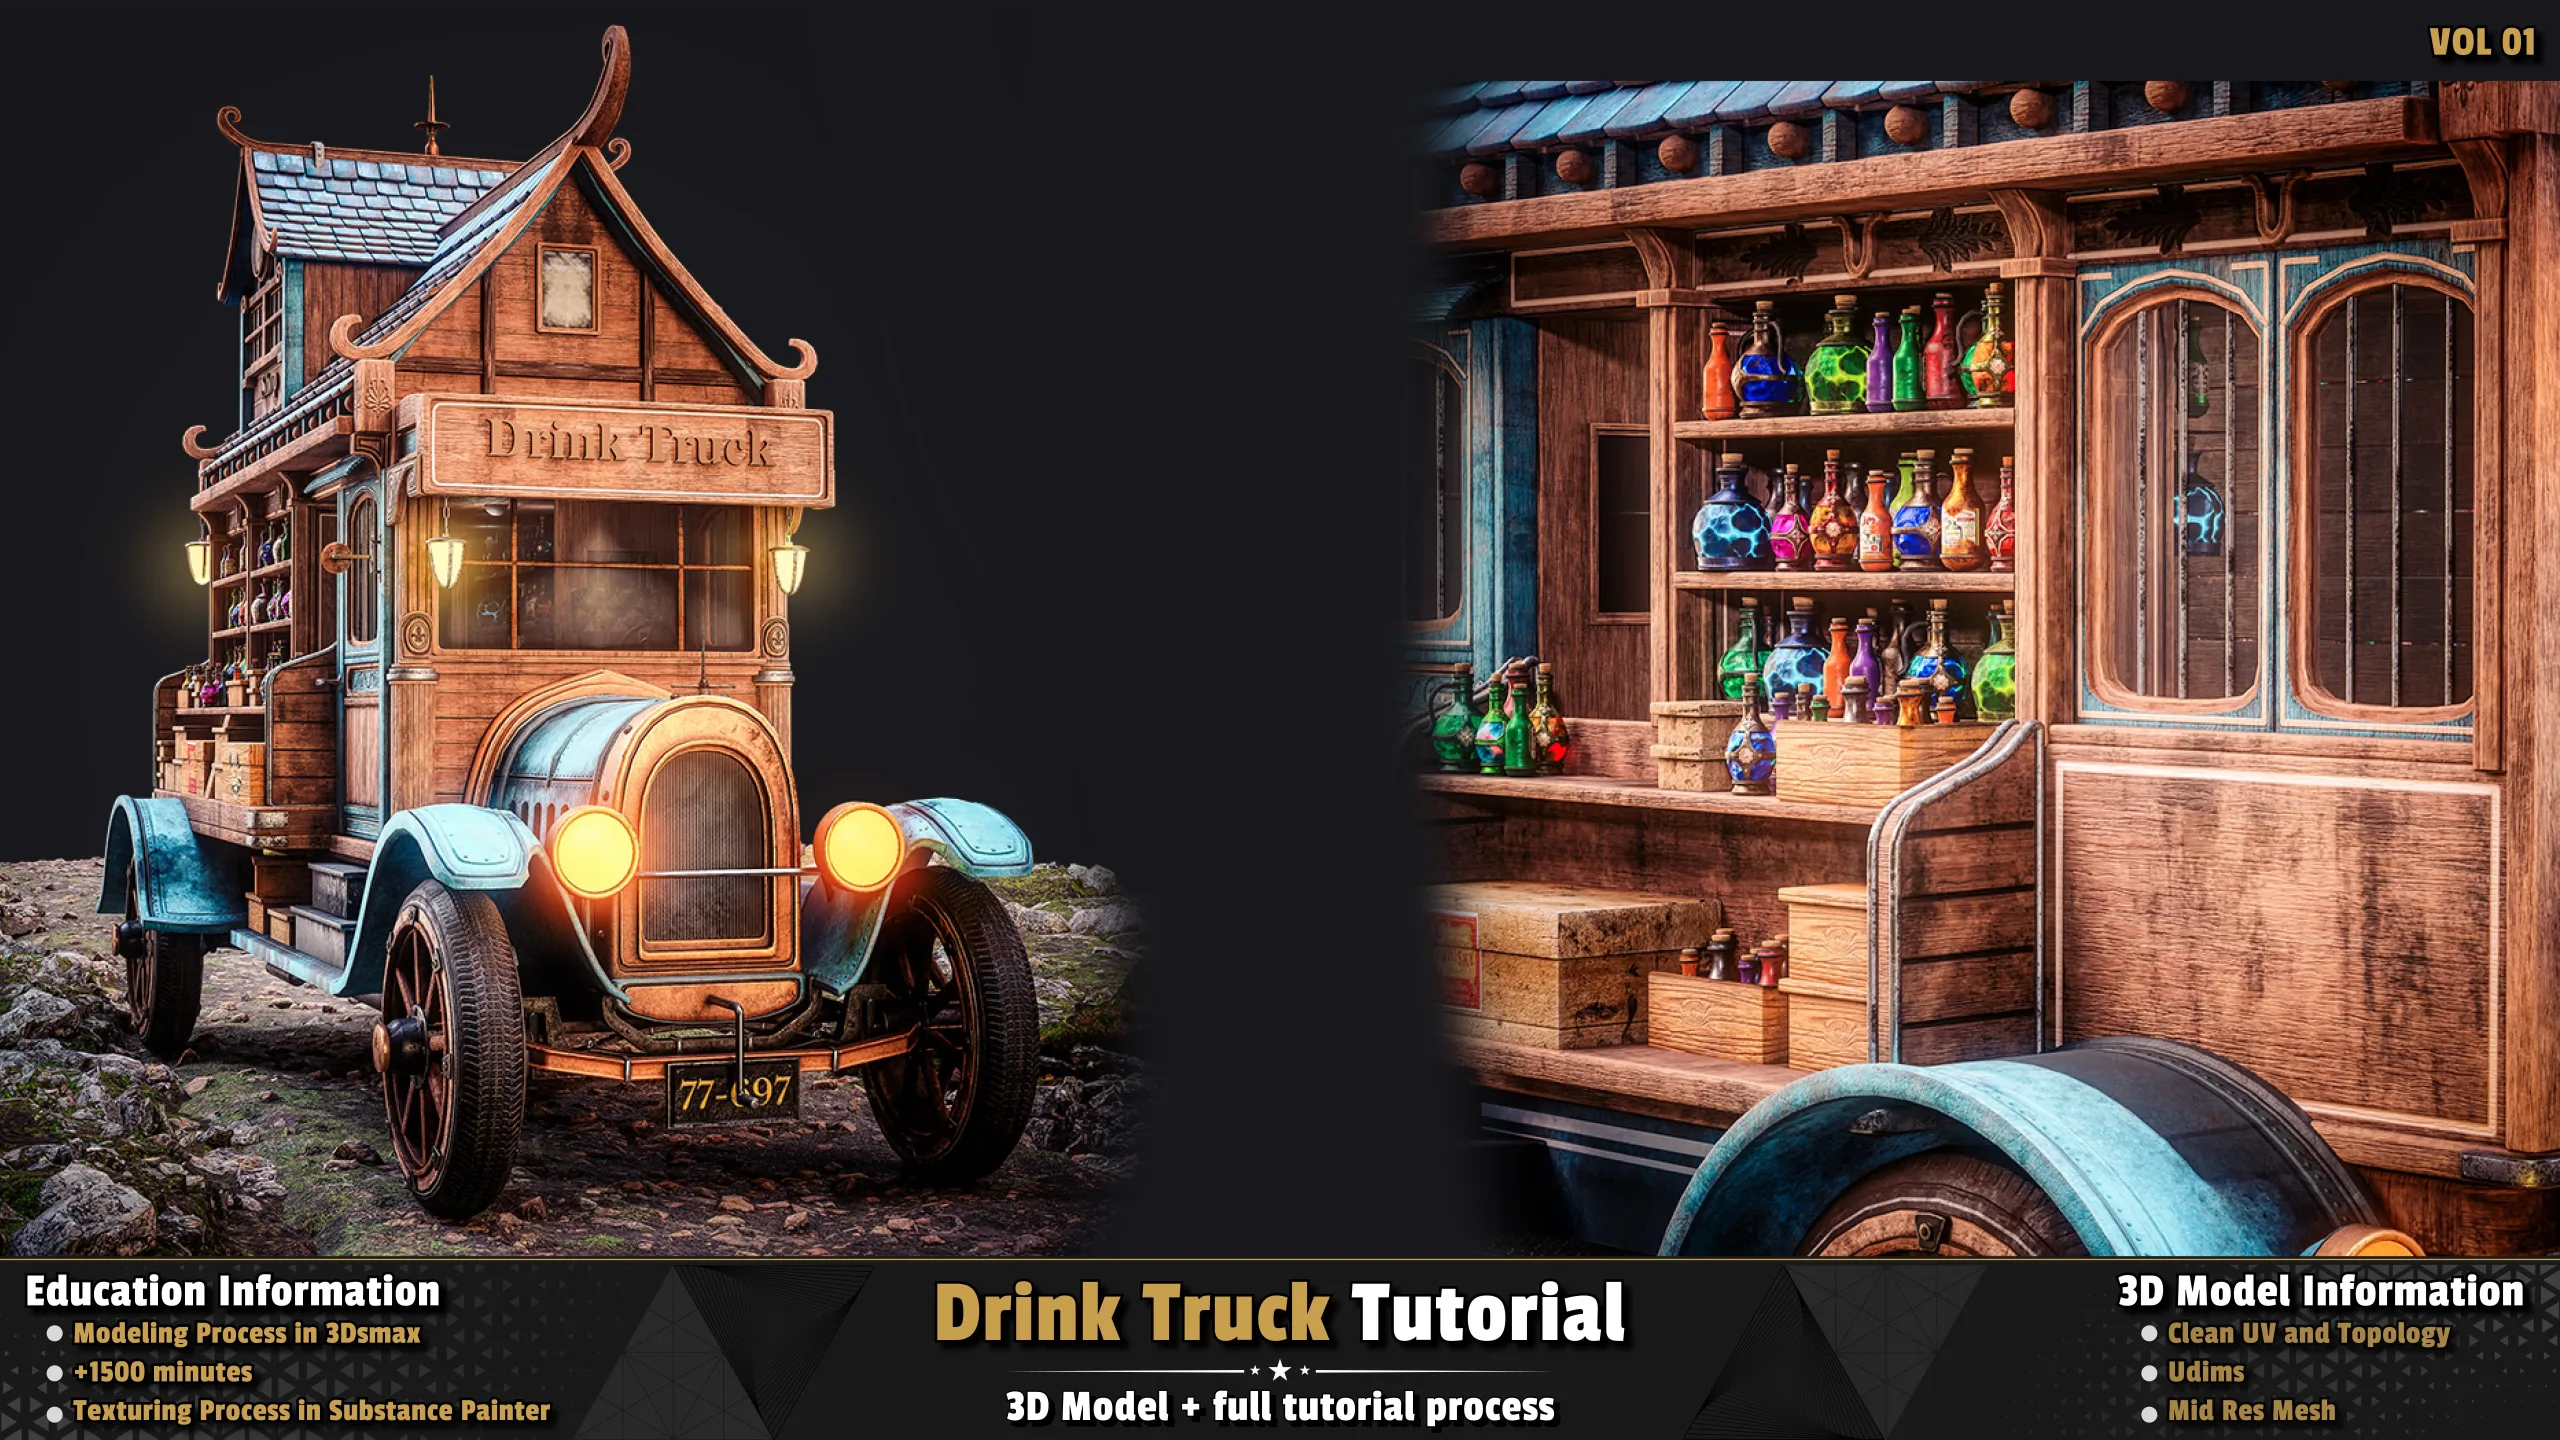 Drink Truck / 3D Model + Full Tutorial Process